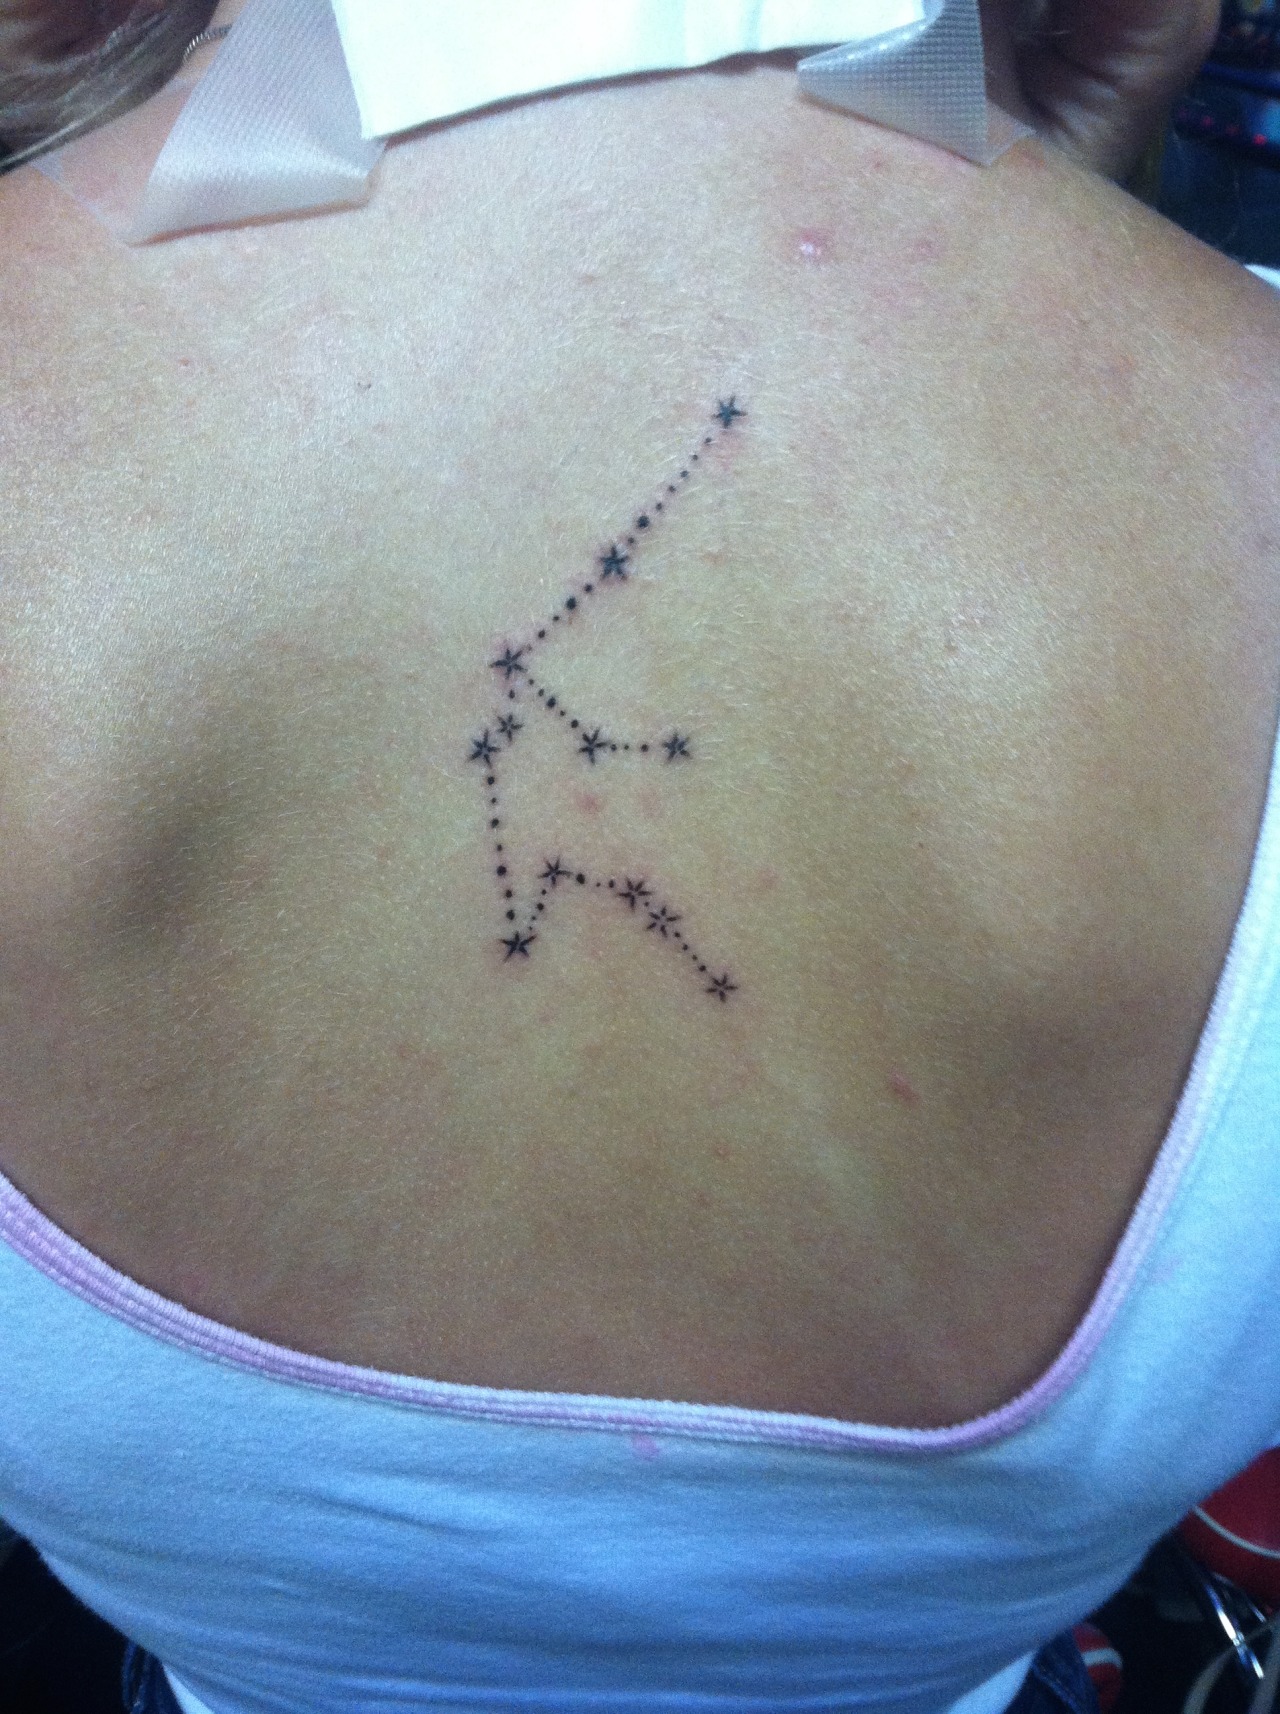 Scorpius constellation tattoo done on the wrist,